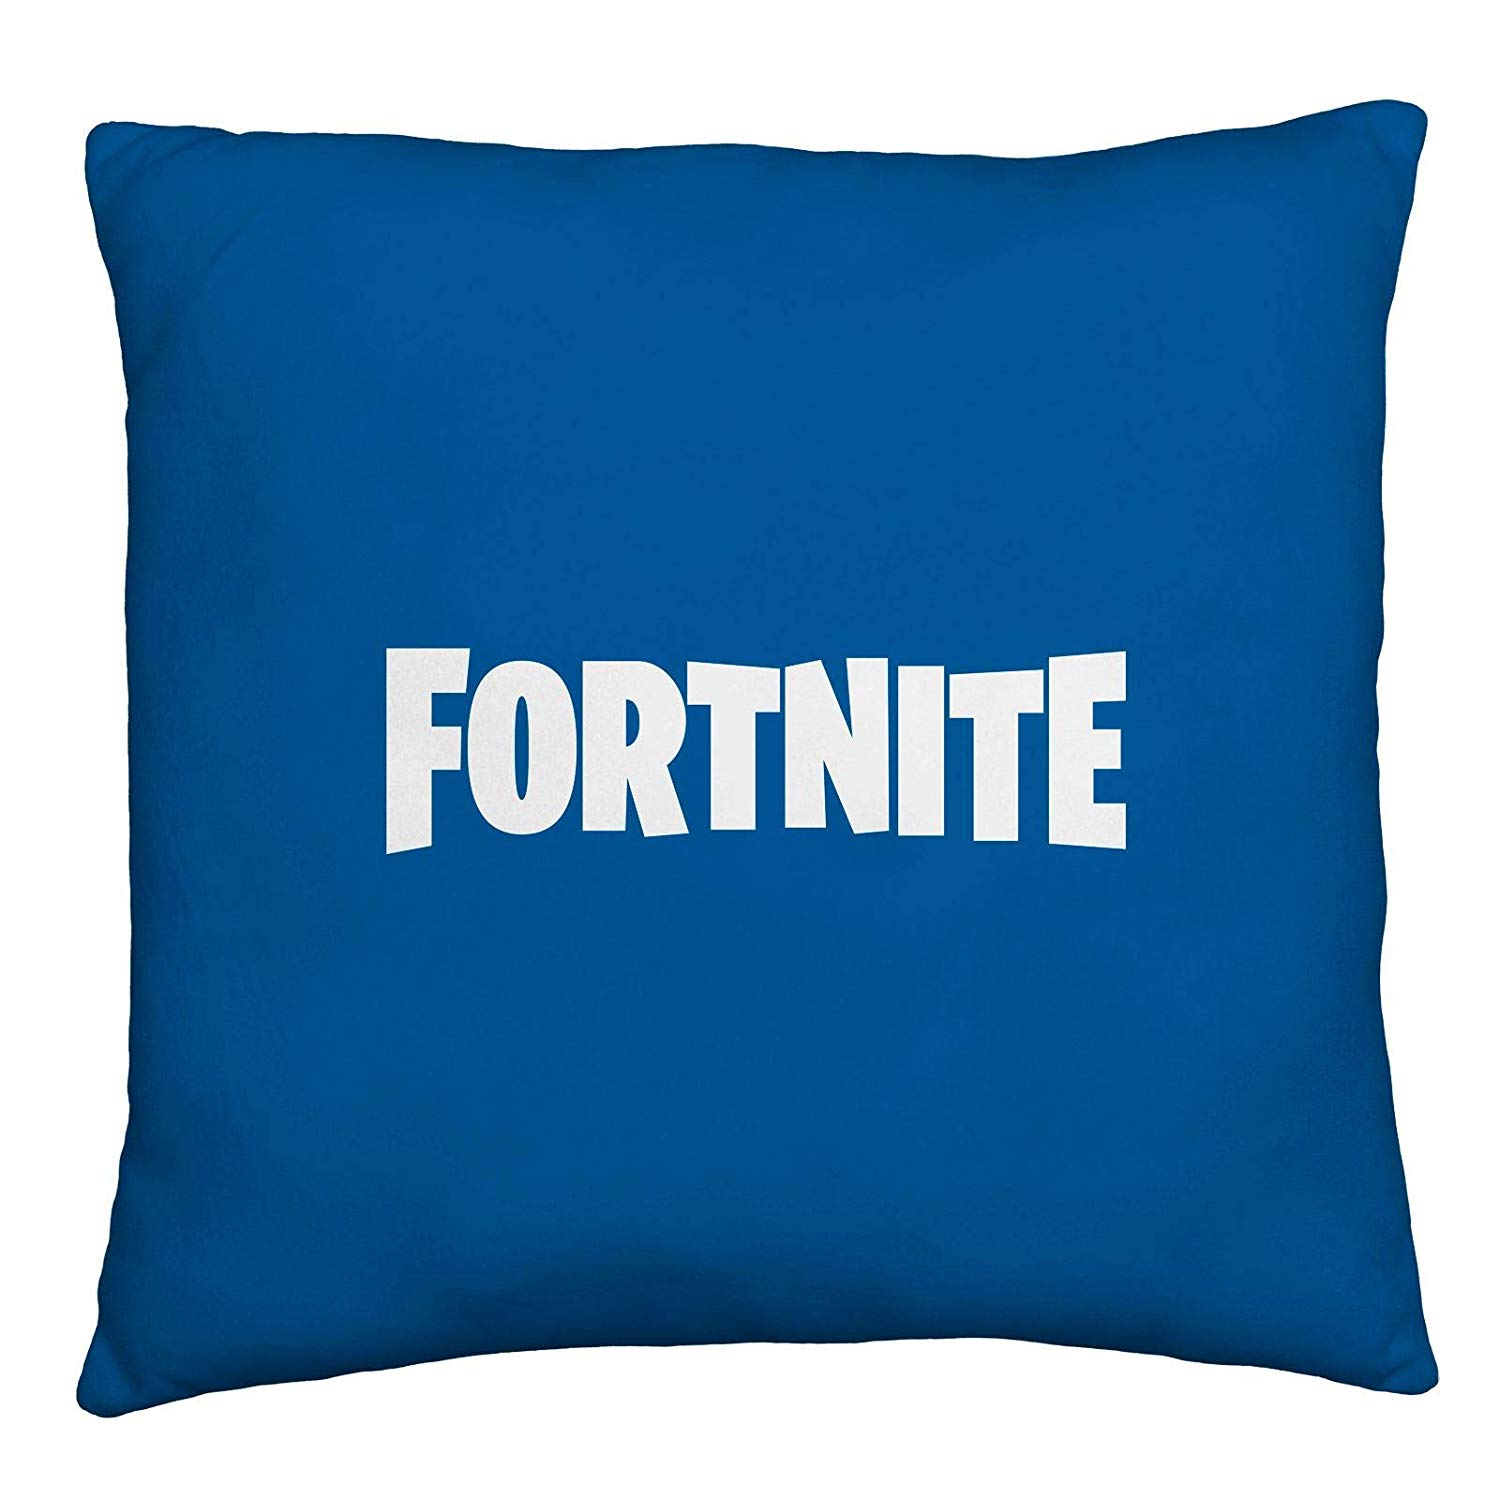 Fortnite Official Square 40x40 cm Printed Cushion